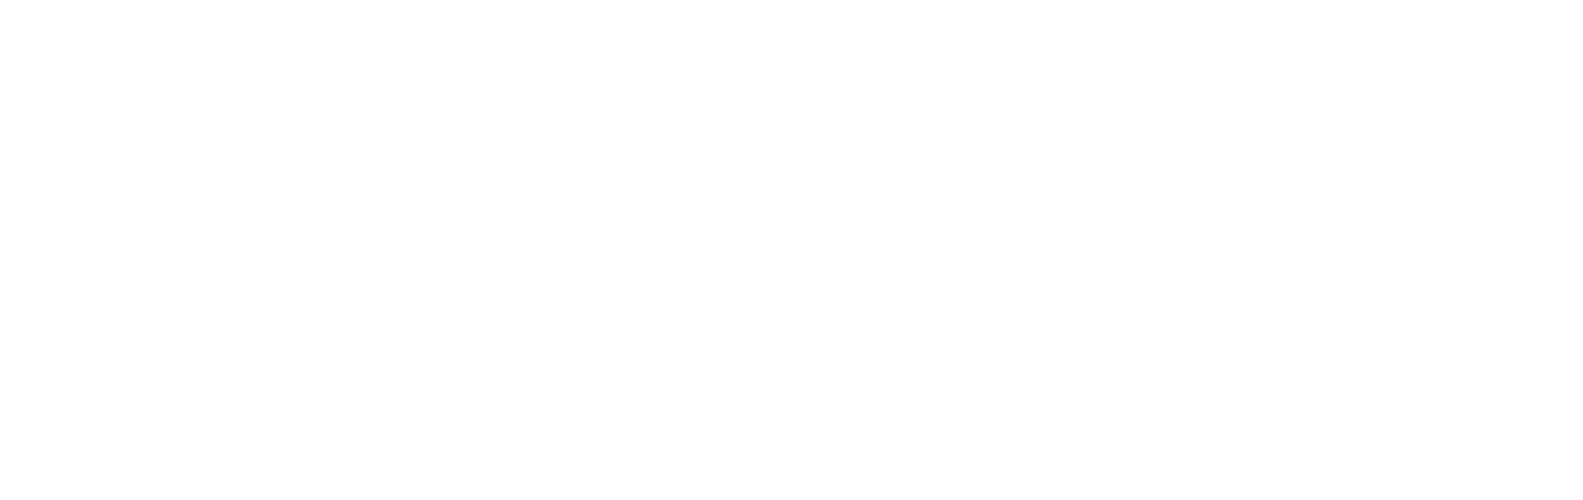 VisioStack logo